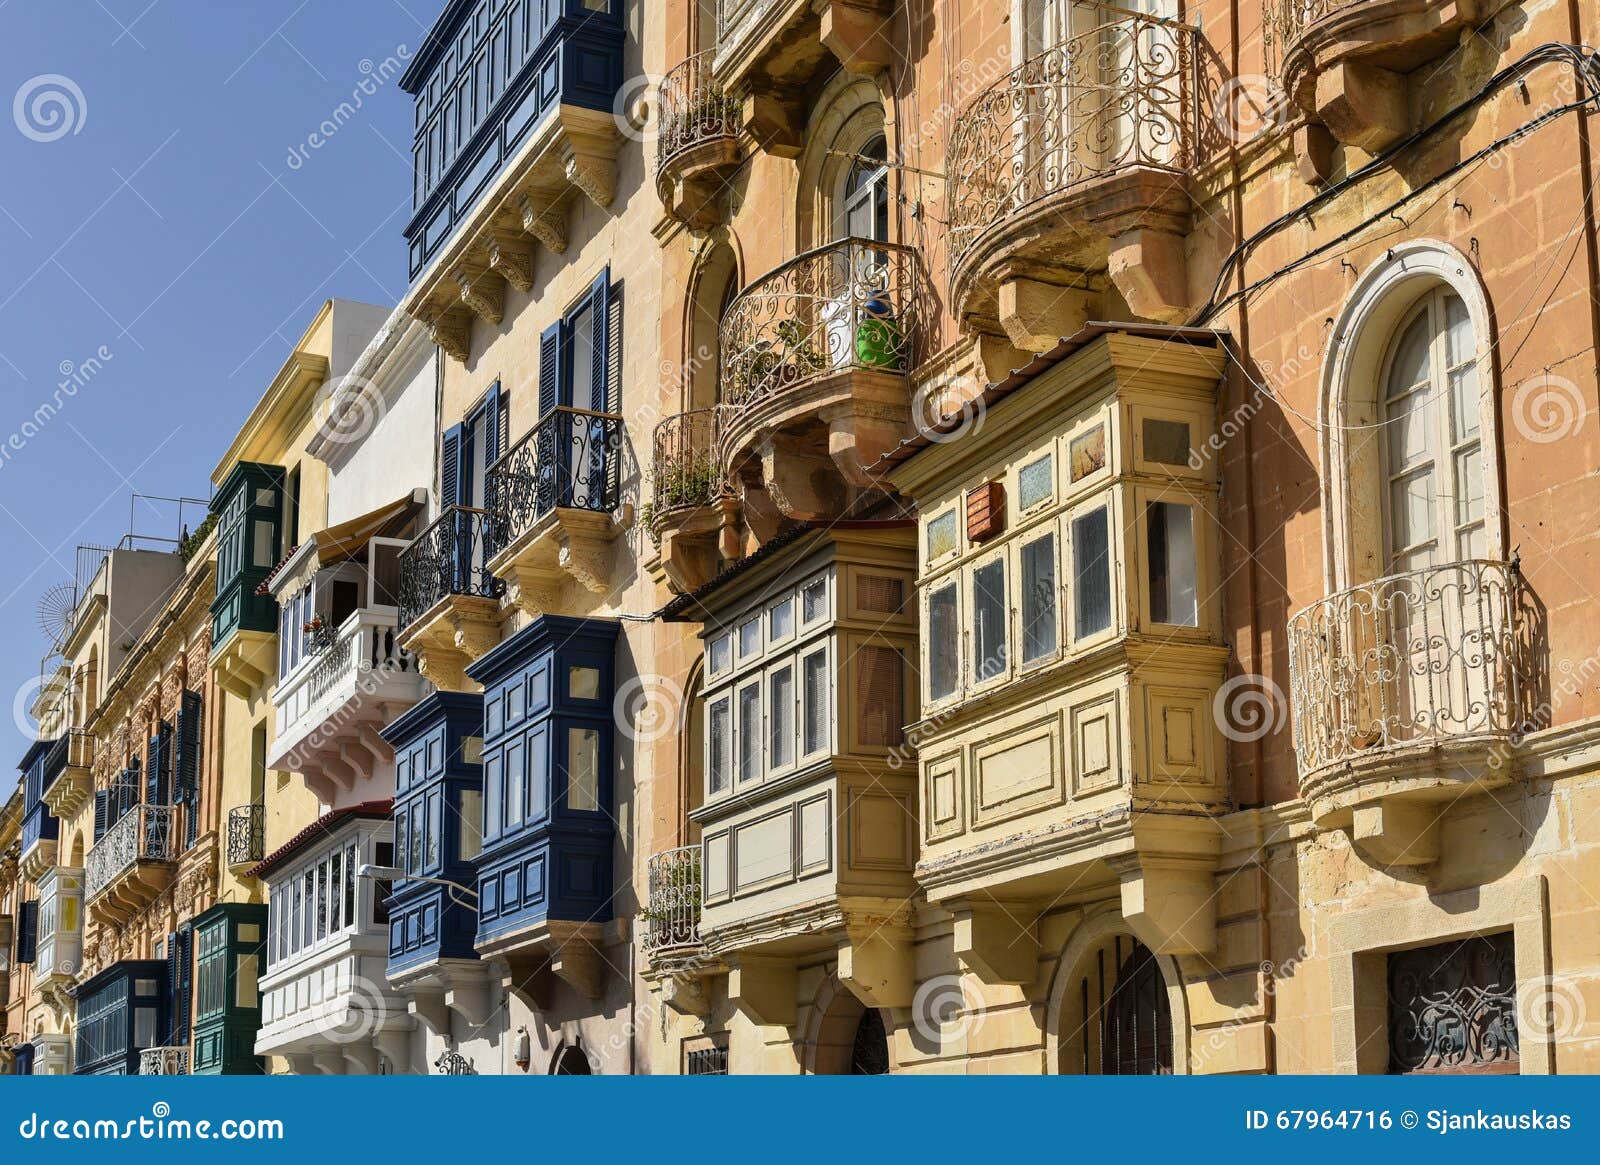 traditional balconies in valletta malta